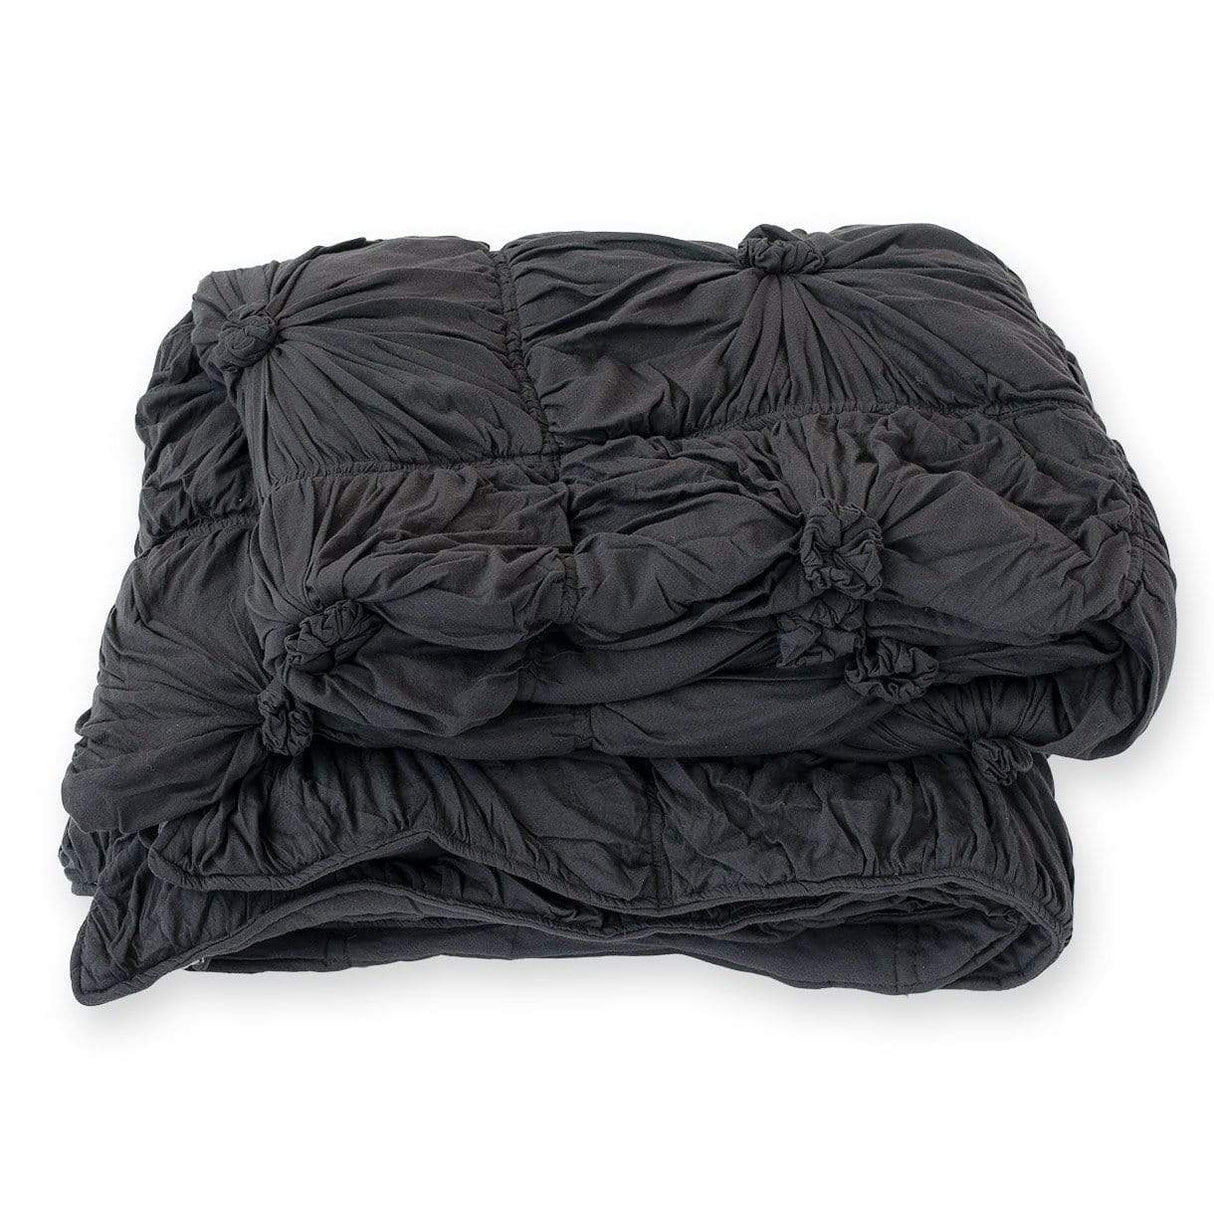 Lazybones Rosette Queen Quilt - Charcoal Bedding and Bath lazybones-qwchaq